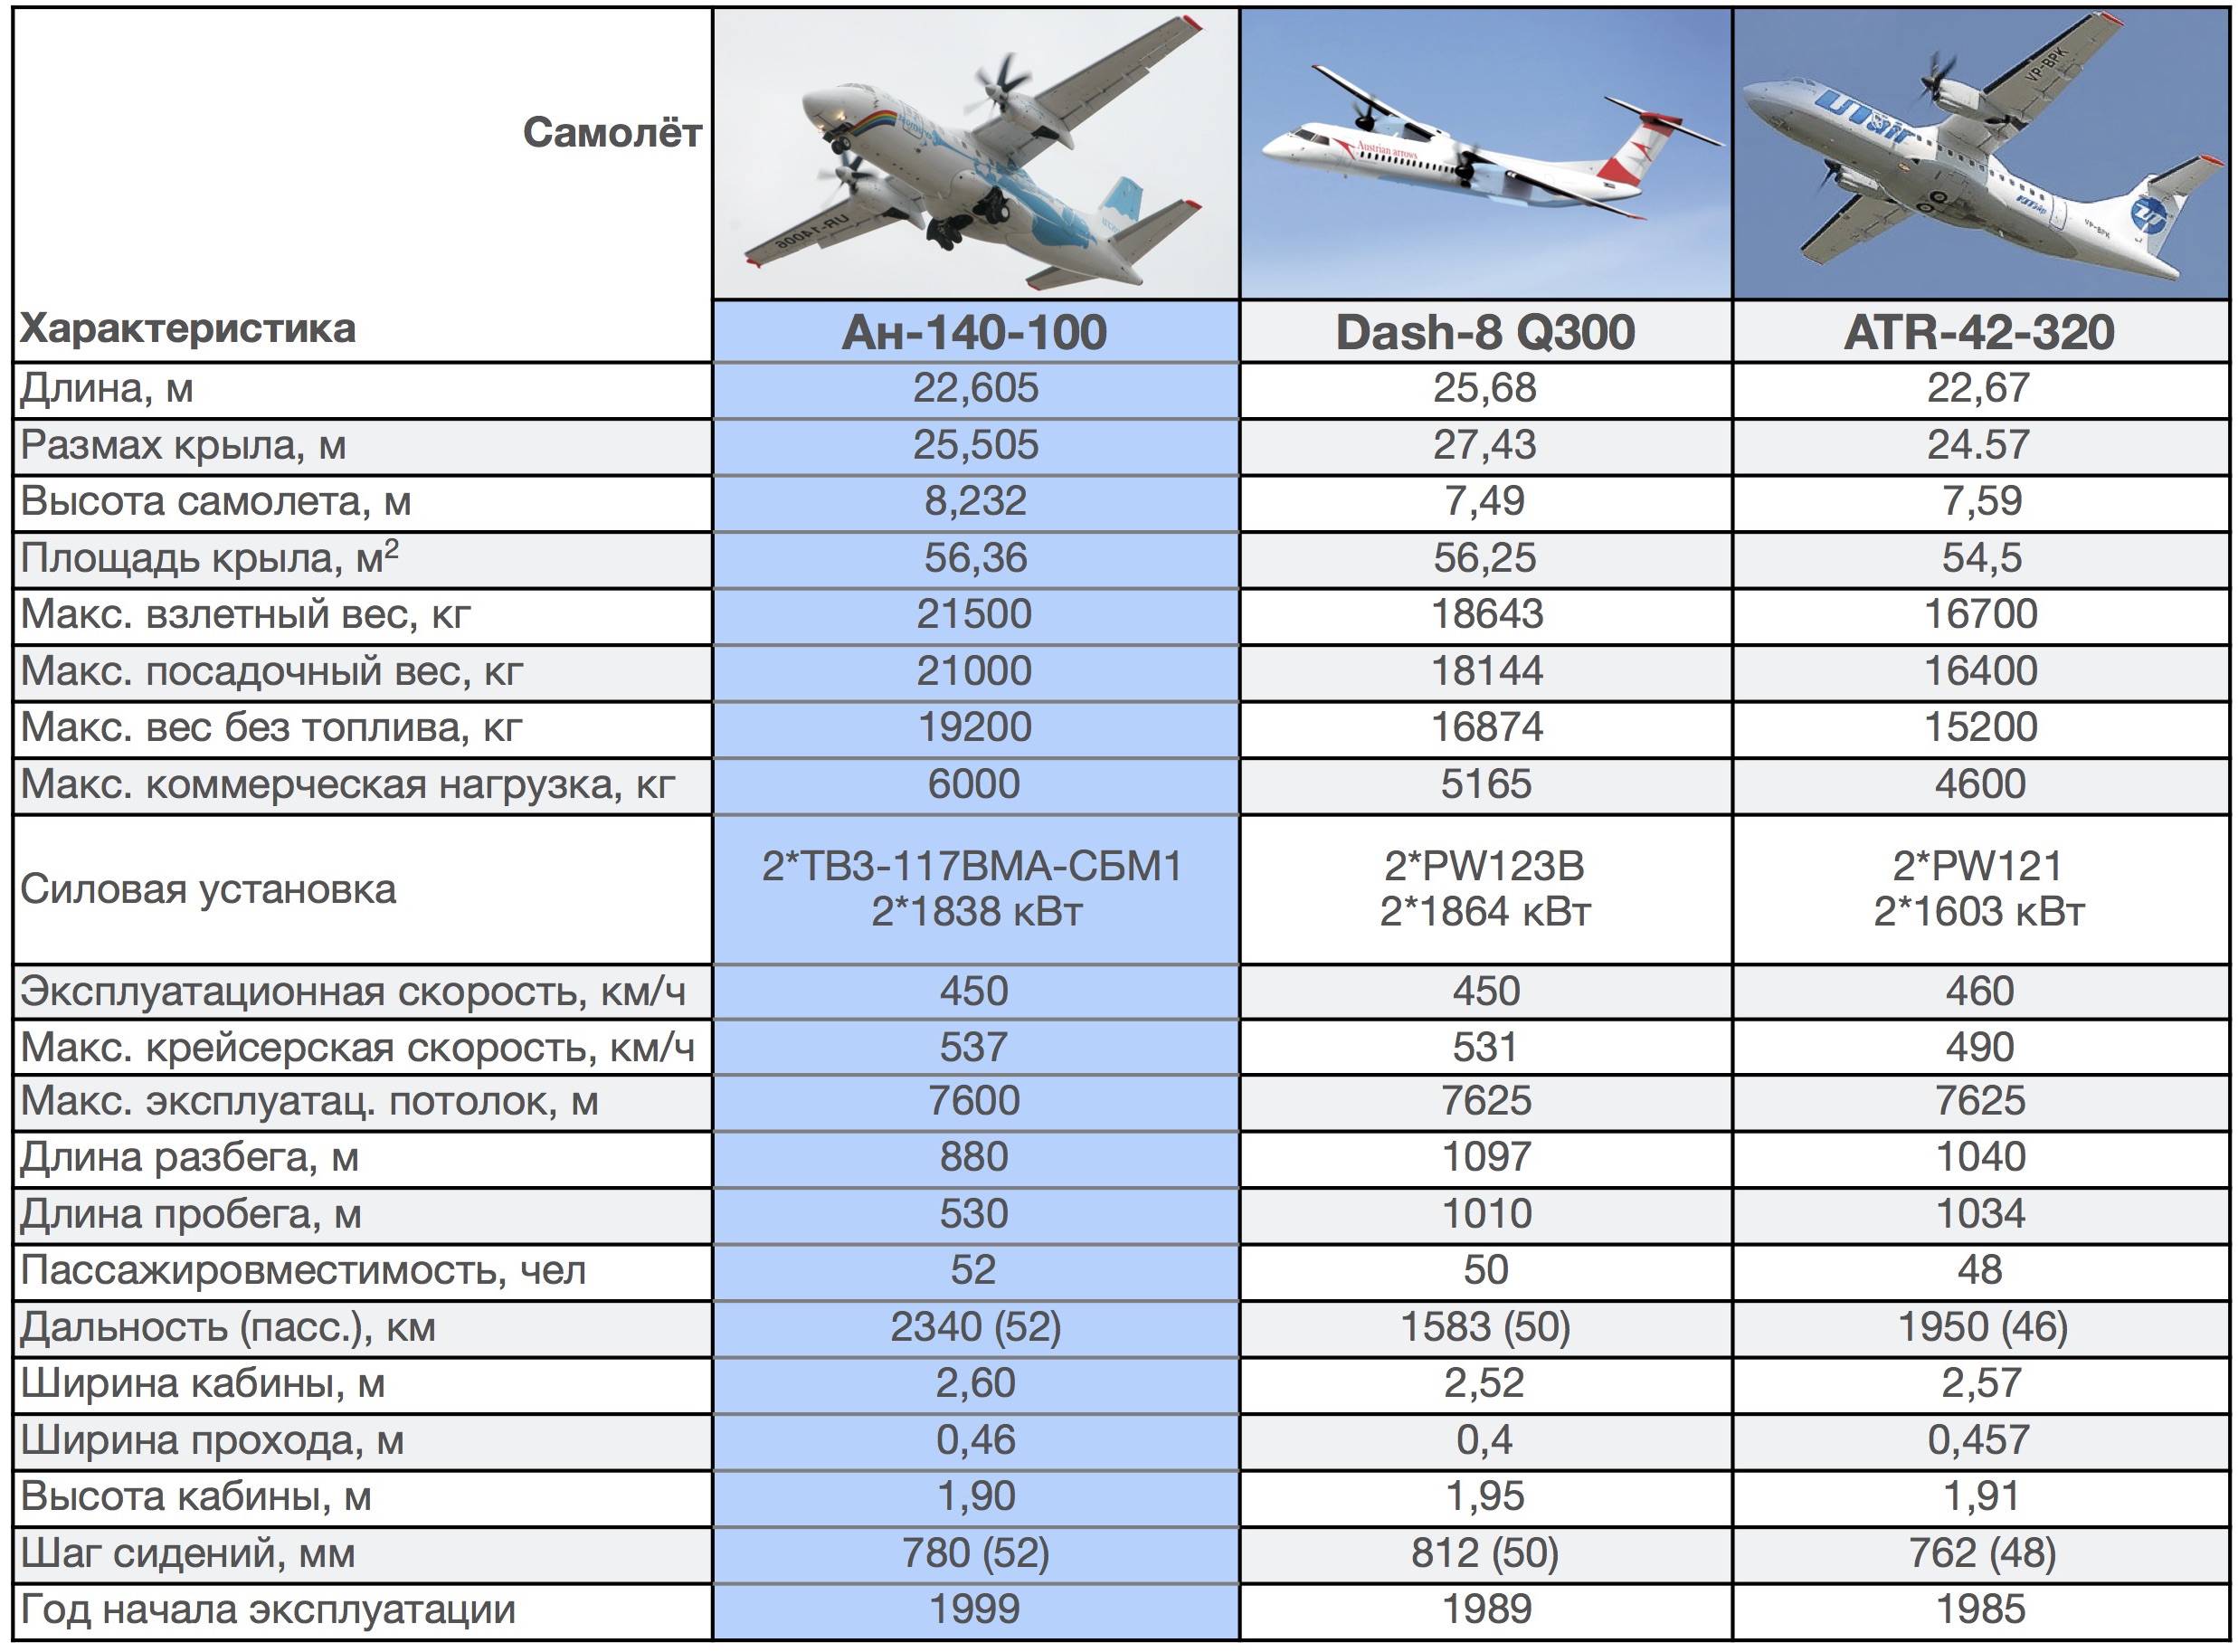 Список эксплуатантов boeing 747 - list of boeing 747 operators - abcdef.wiki